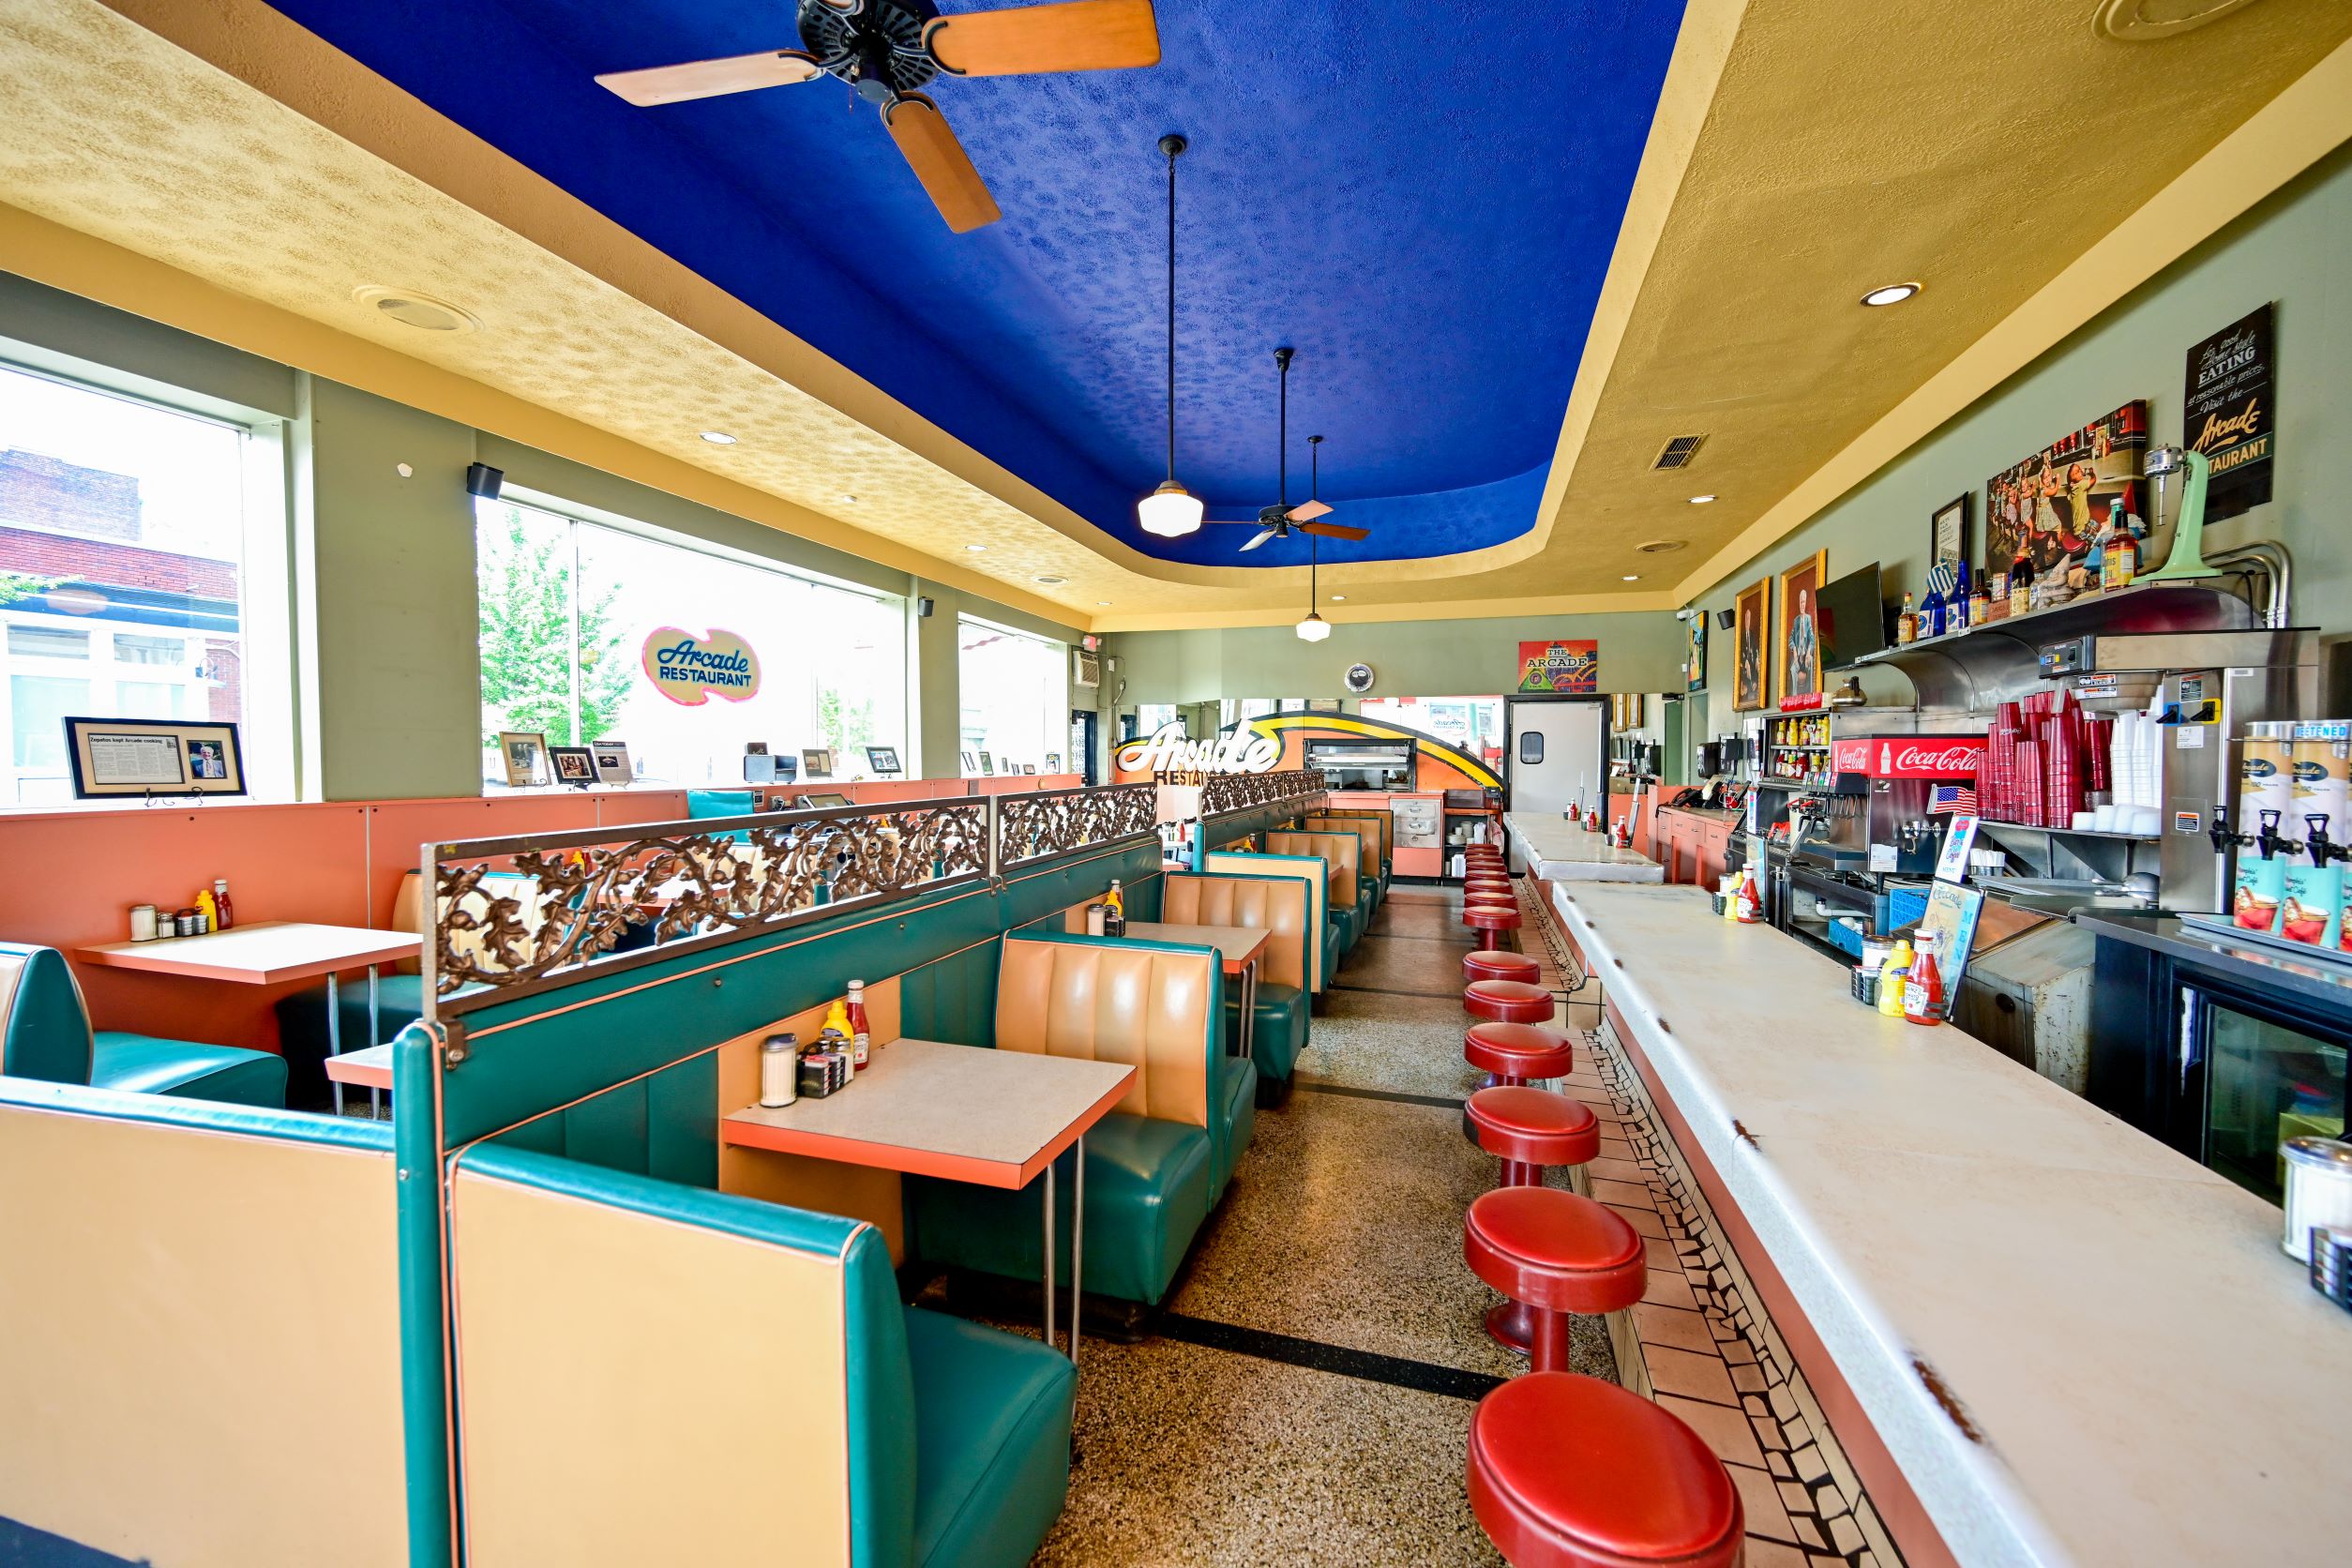 Arcade Restaurant –-lar do sanduíche de banana frita e manteiga de amendoim favorito de Elvis Presley